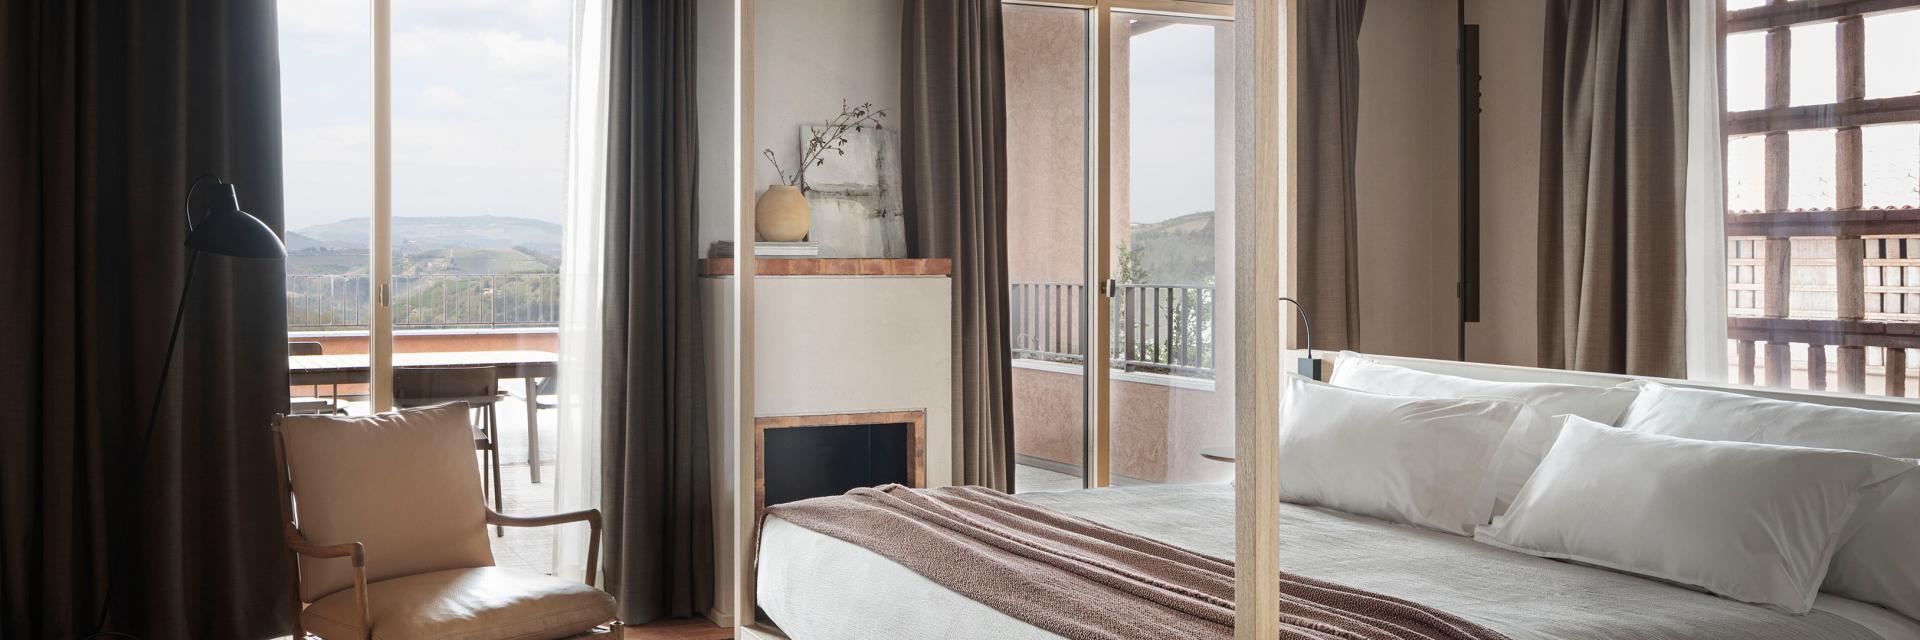 Guest Room accommodations at Casa di Langa